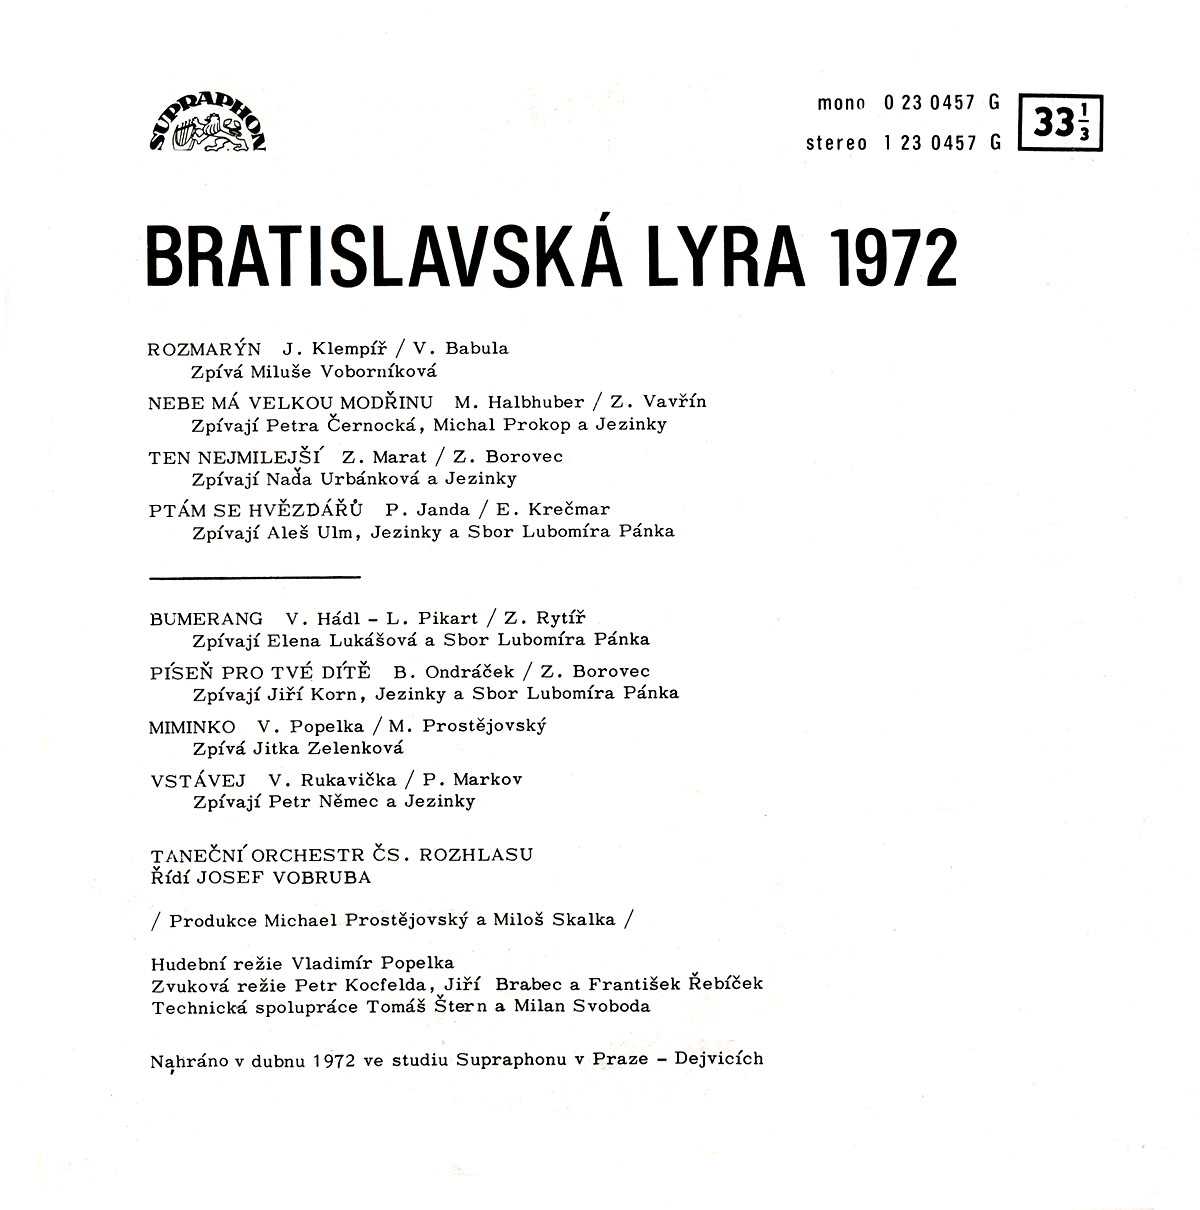 BRATISLAVSK LYRA 1972